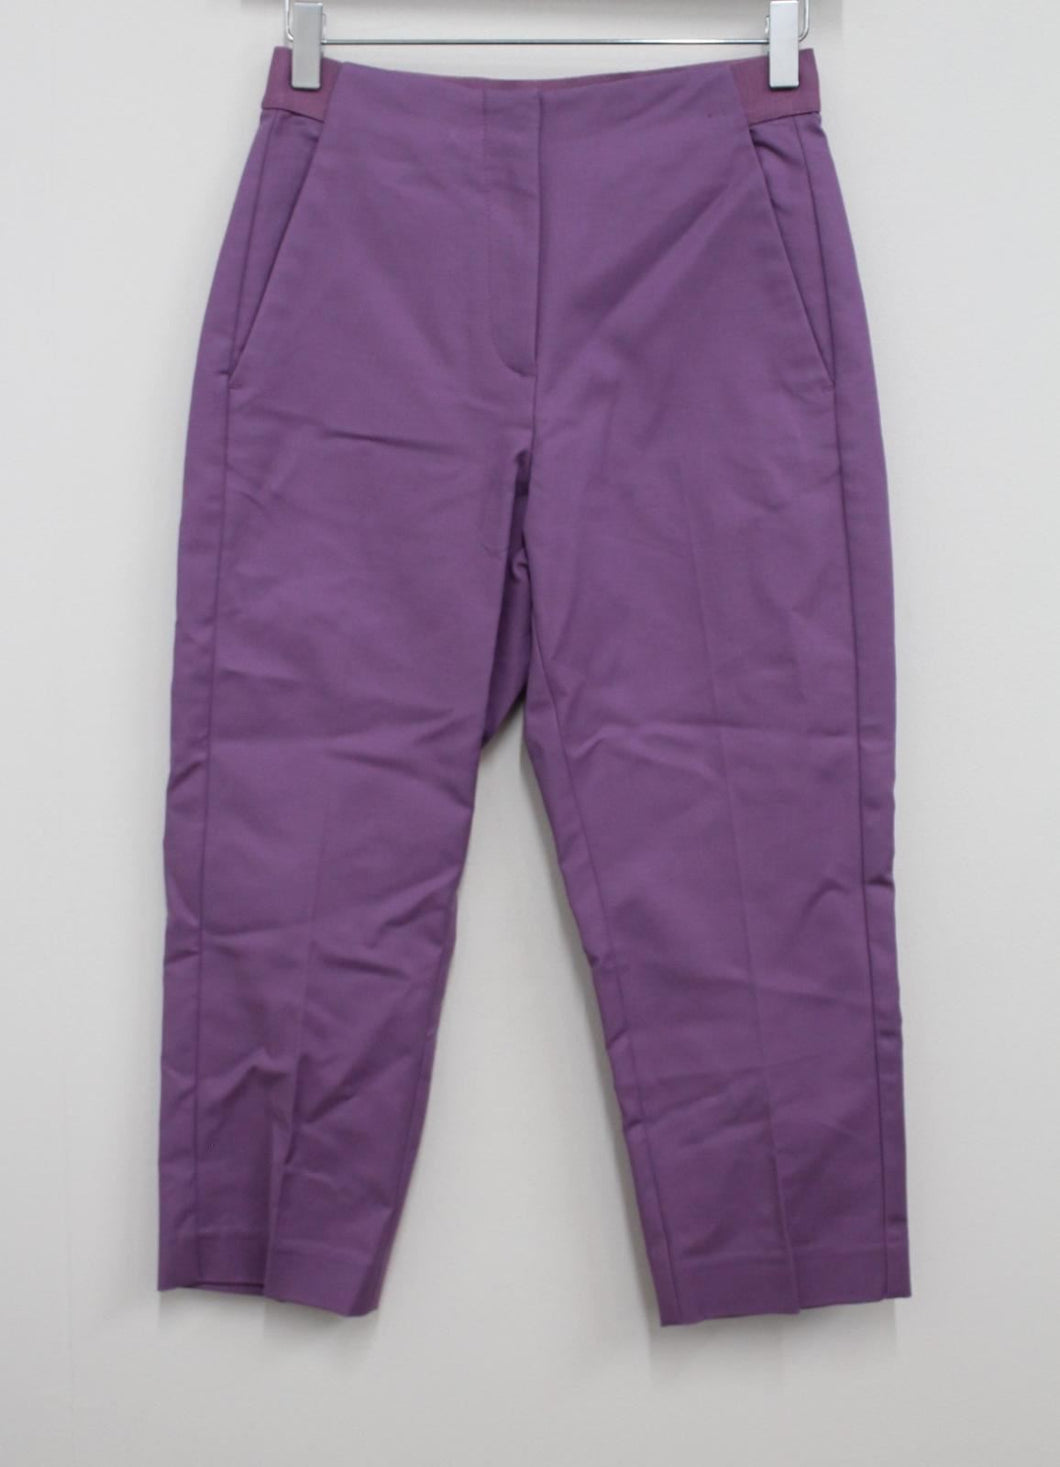 M&S Marks & Spencer Ladies Heather Purple Slim Crop Trousers UK6 RRP22.5 NEW